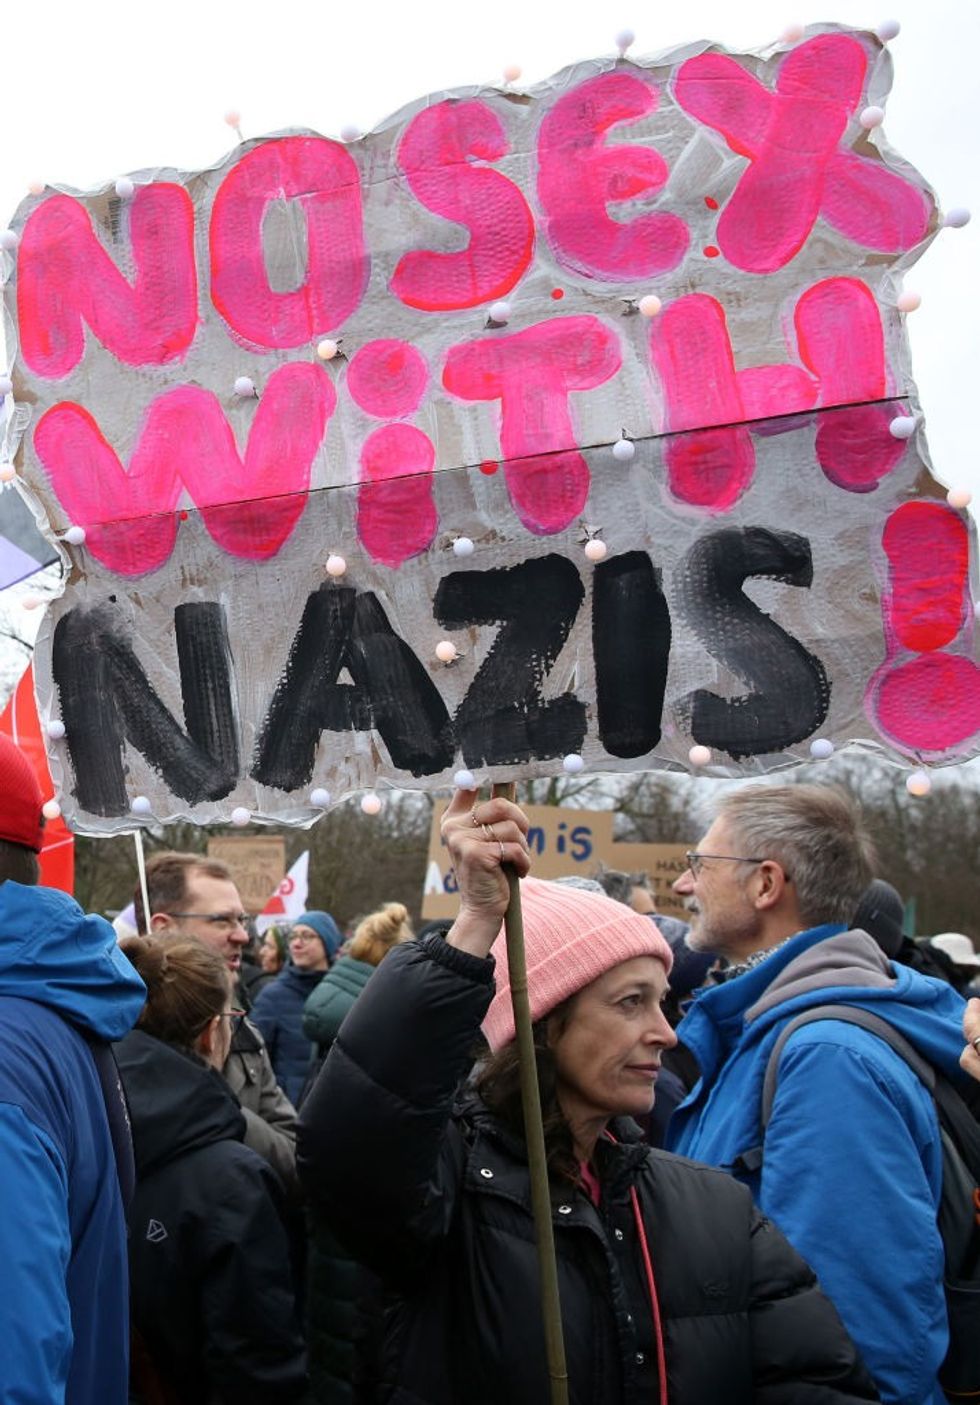 No sex with Nazis